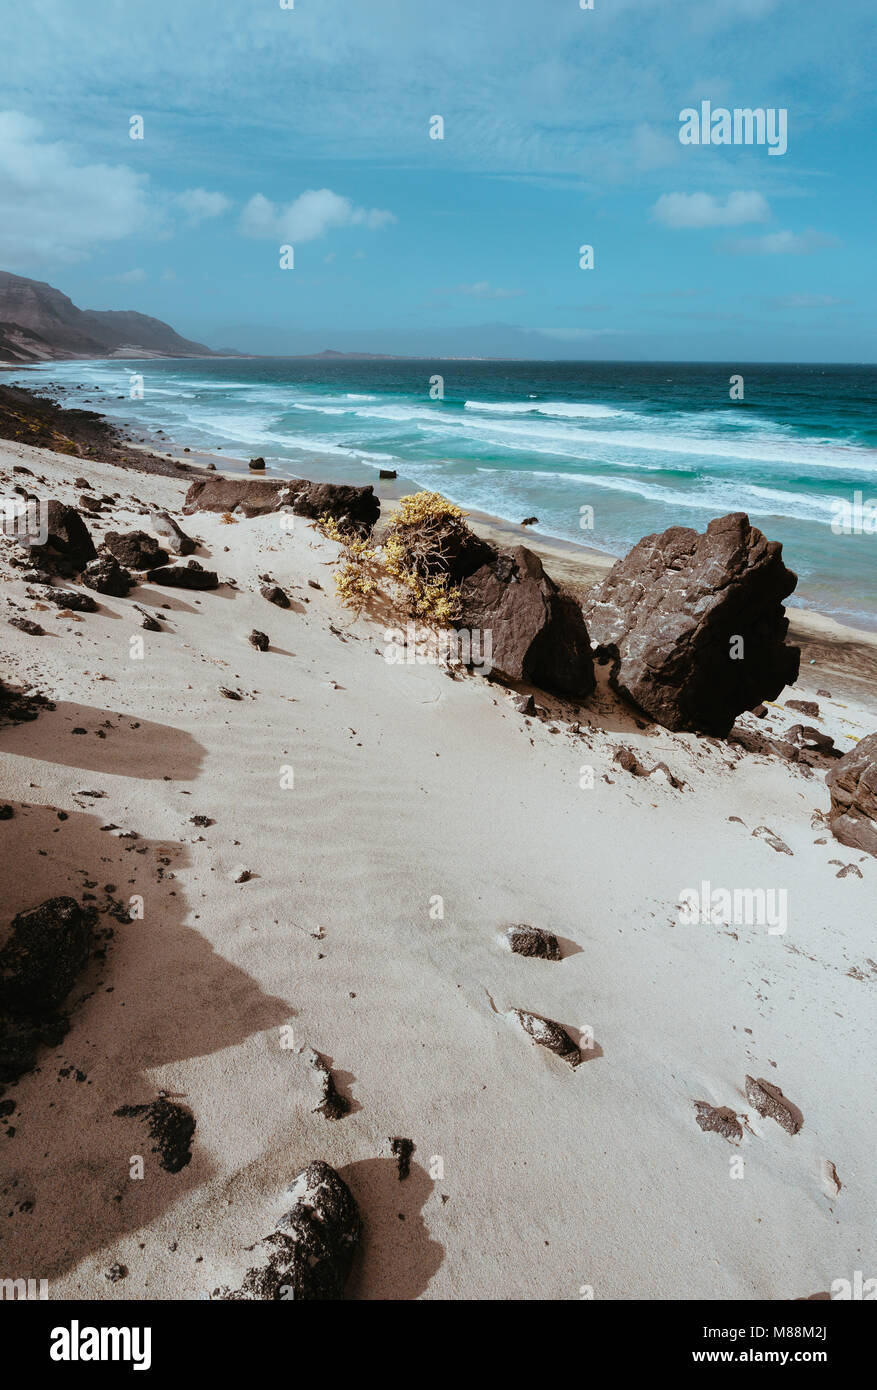 Huge volcanic stone boulder on spectacular white sand dunes of remote deserted beach Praia Grande. Ocean hitting coastline in background. Barren vegetation. Calhau, Sao Vicente Island Cape Verde Stock Photo